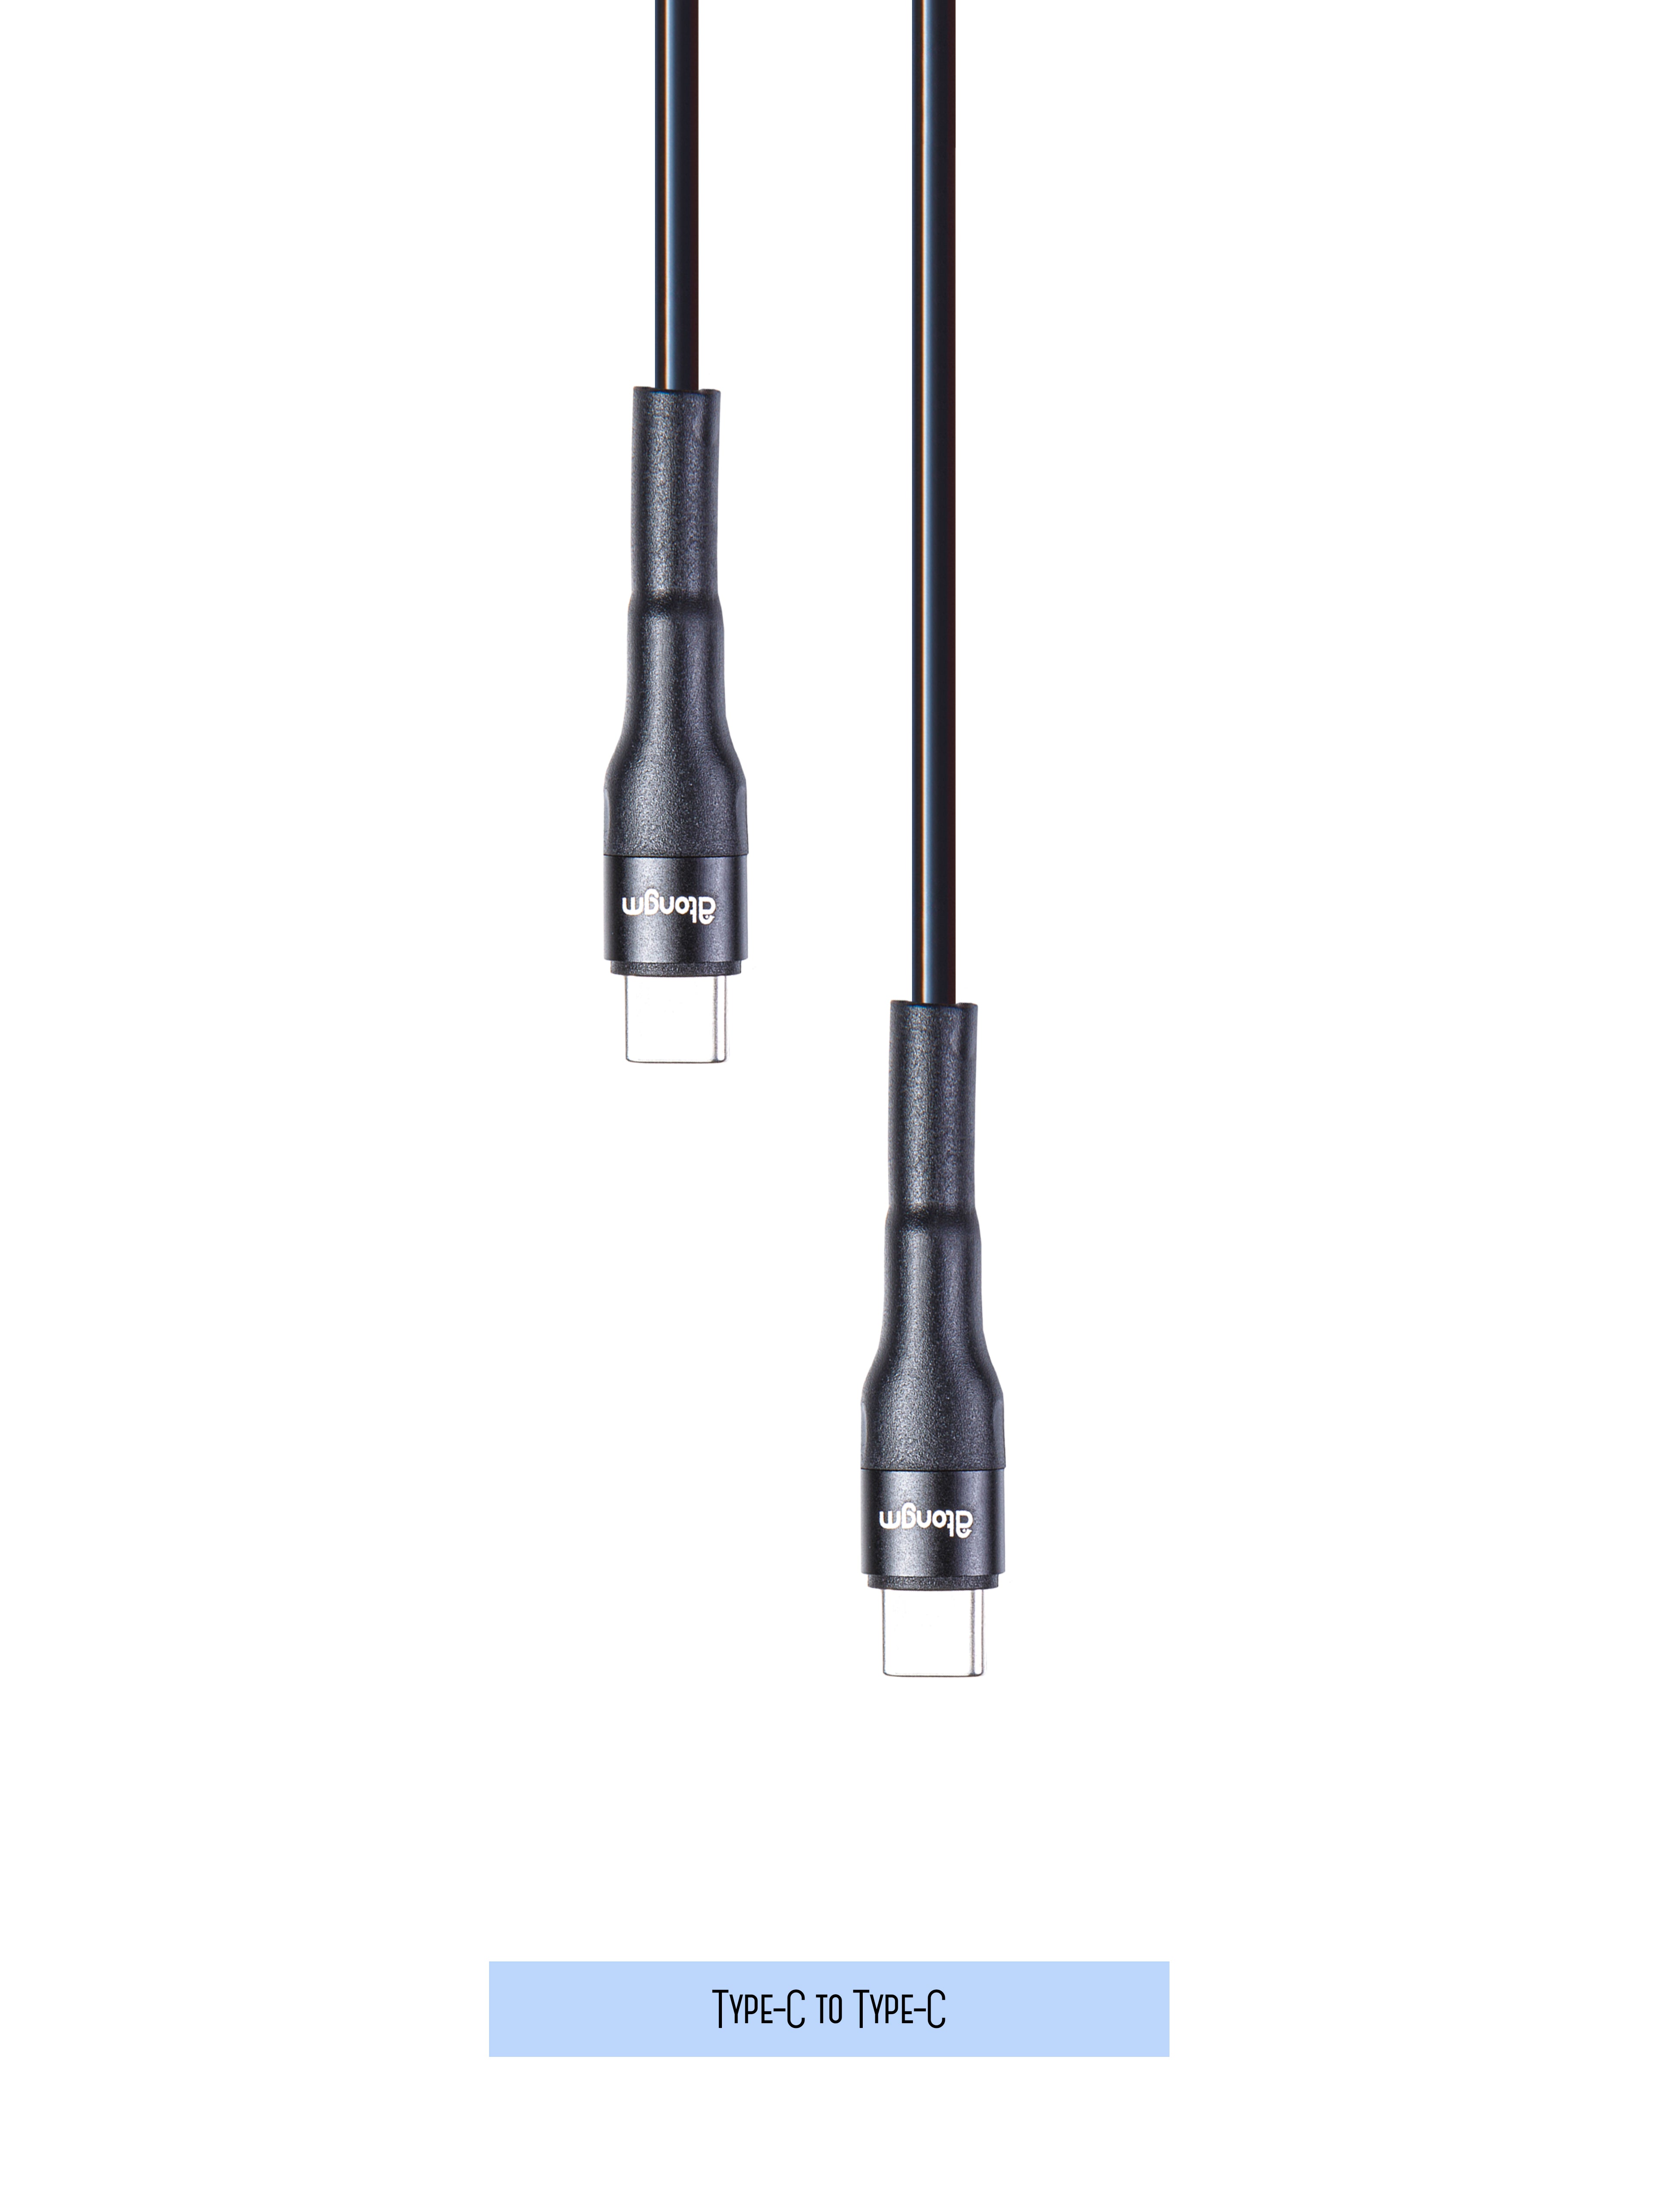 atongm type-c to type-c kabel 3A/27W uzatma kabeli Sürətli doldurma kabeli Örgülü qırılmaz kabel (Smart Chip Texnologiyası ilə)